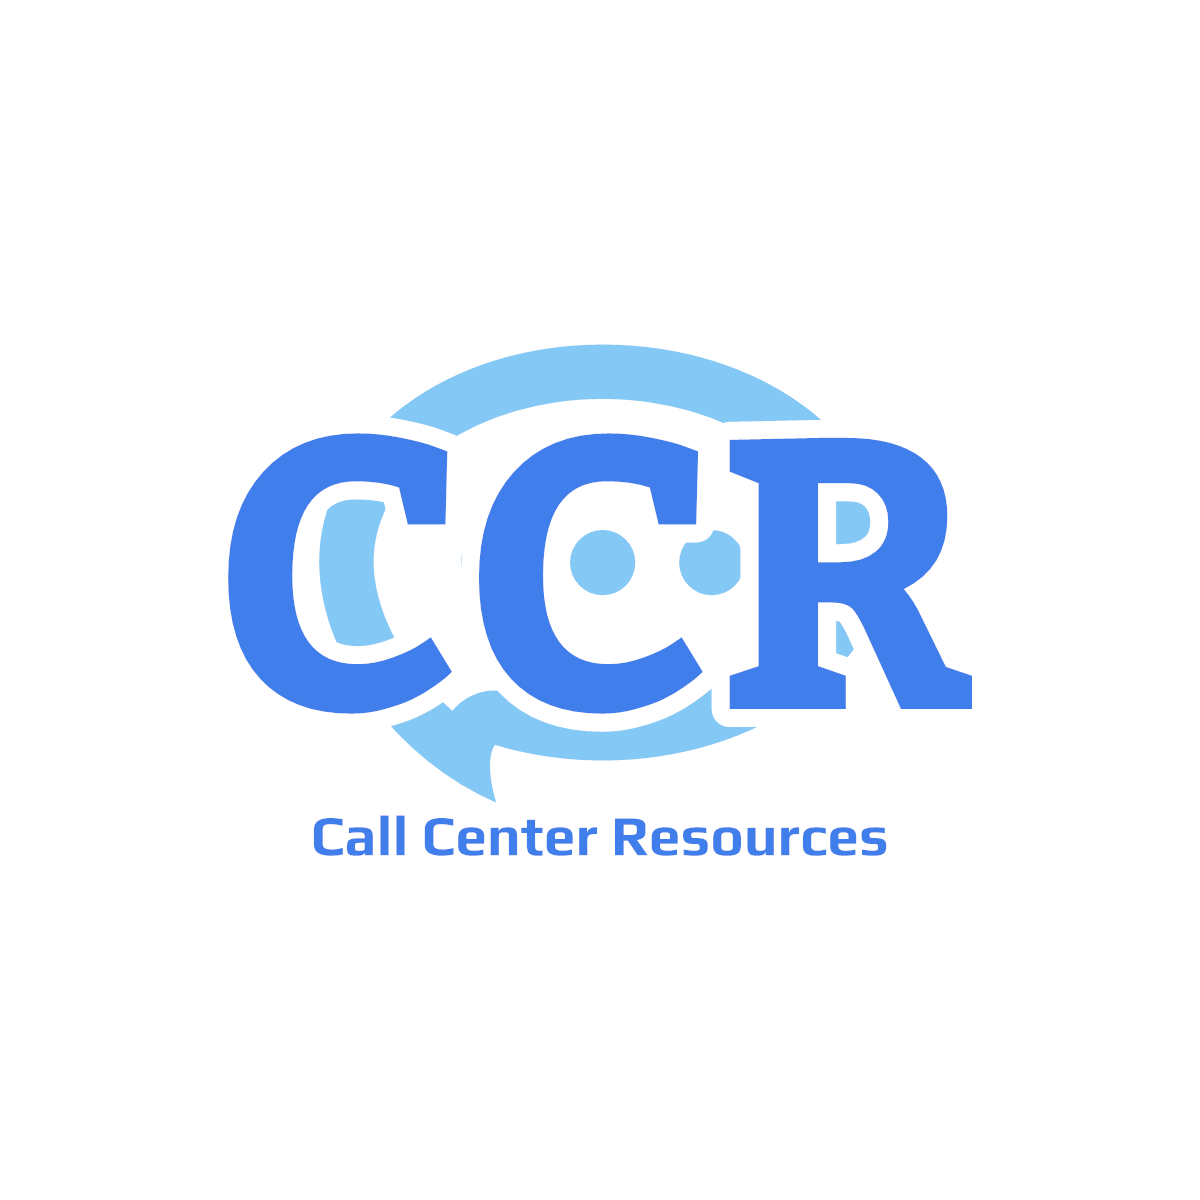 Call Center Resources